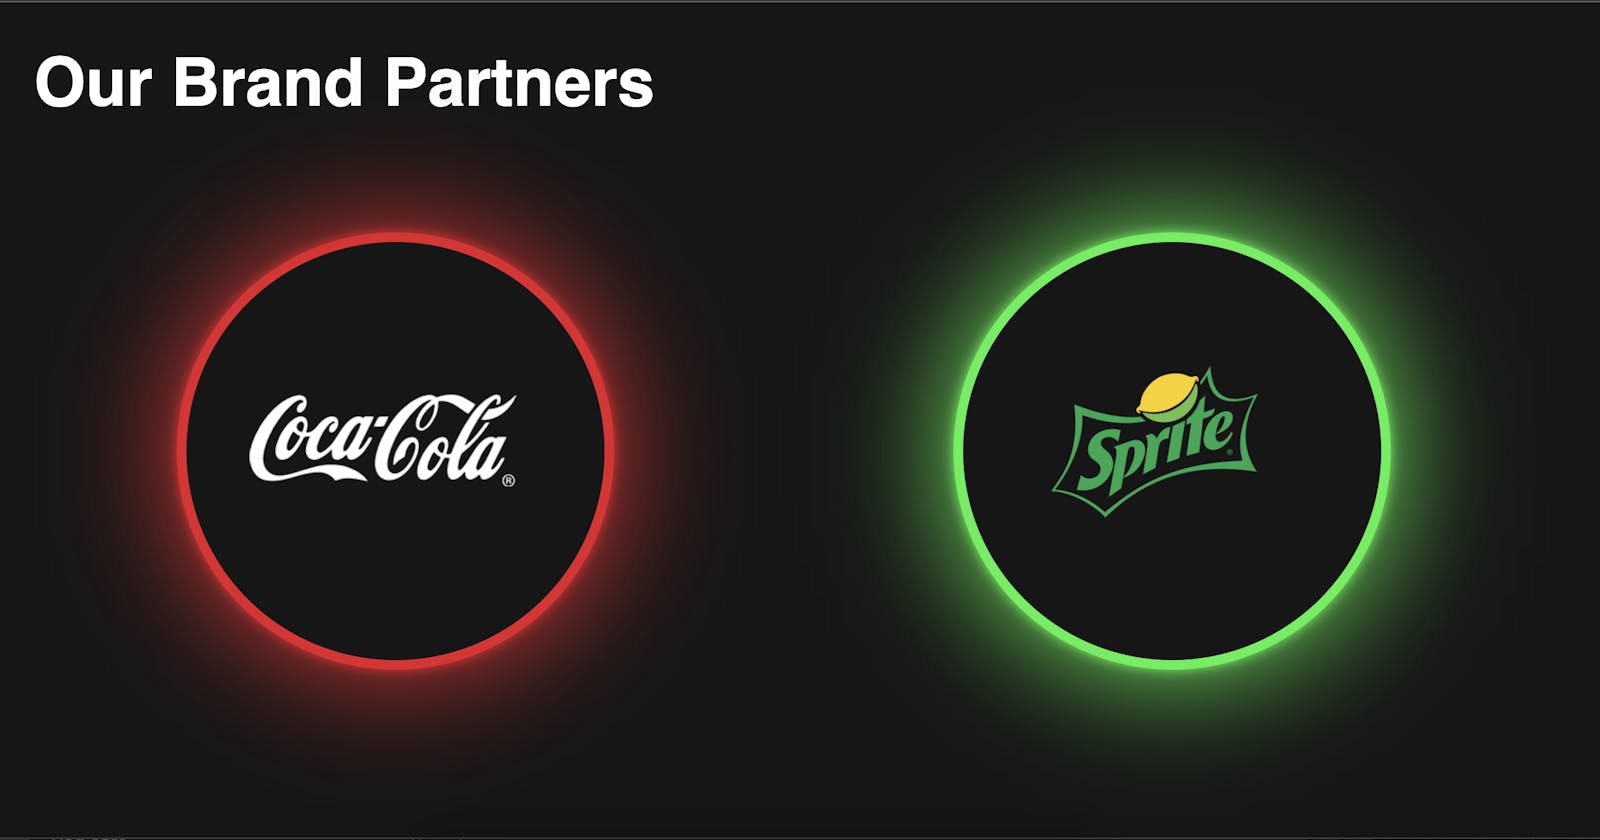 Day 03: Coca-Cola Website (Project)